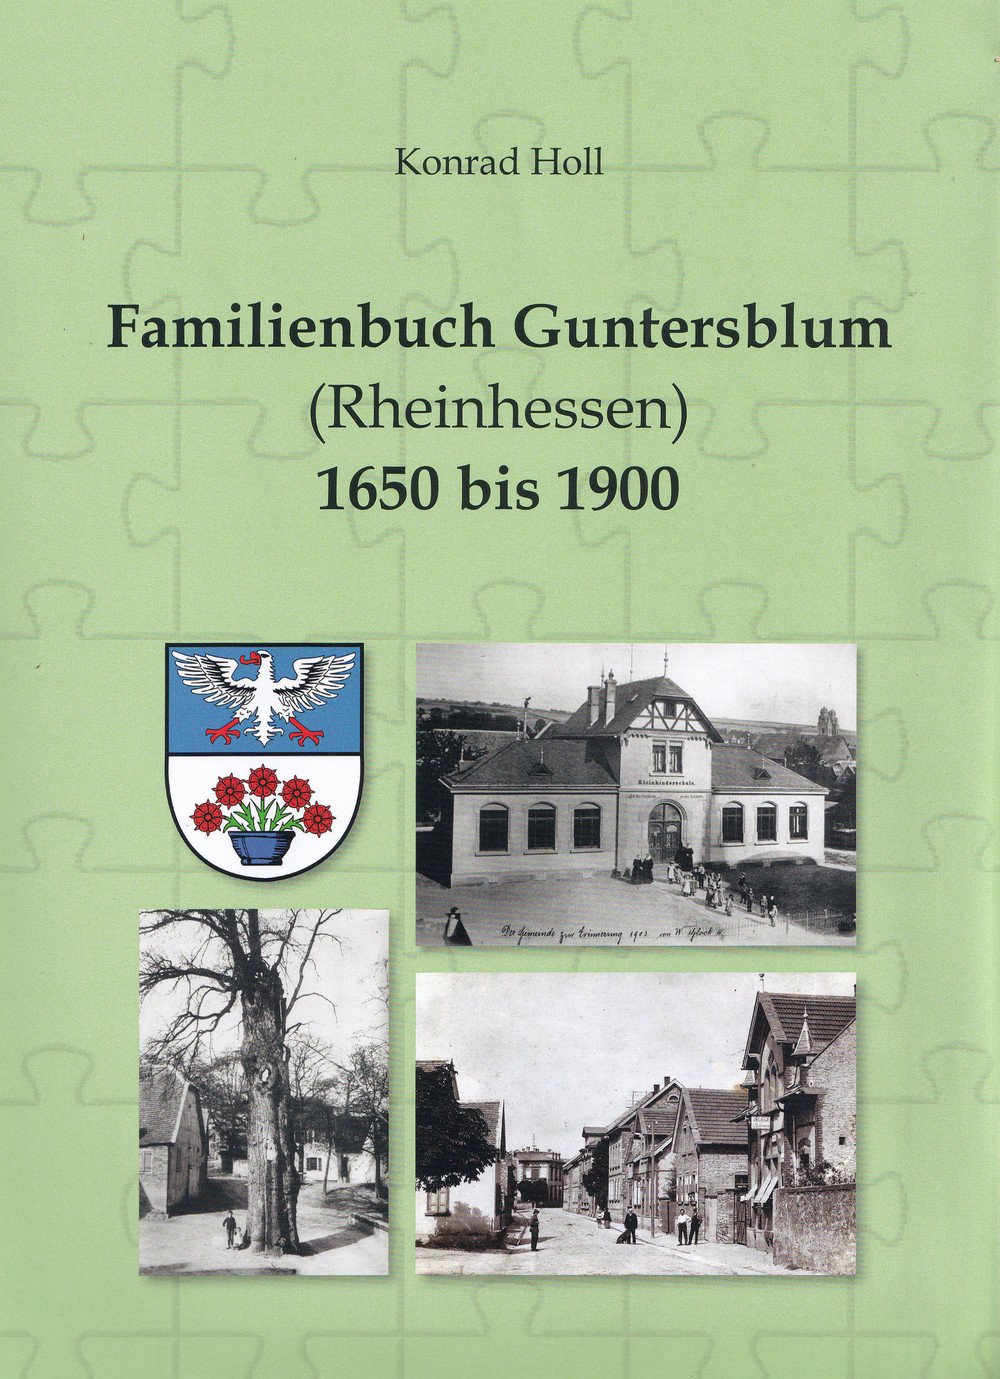 Familienbuch Guntersblum (Rheinhessen) 1650 bis 1900 (Museum Guntersblum CC BY-NC-SA)